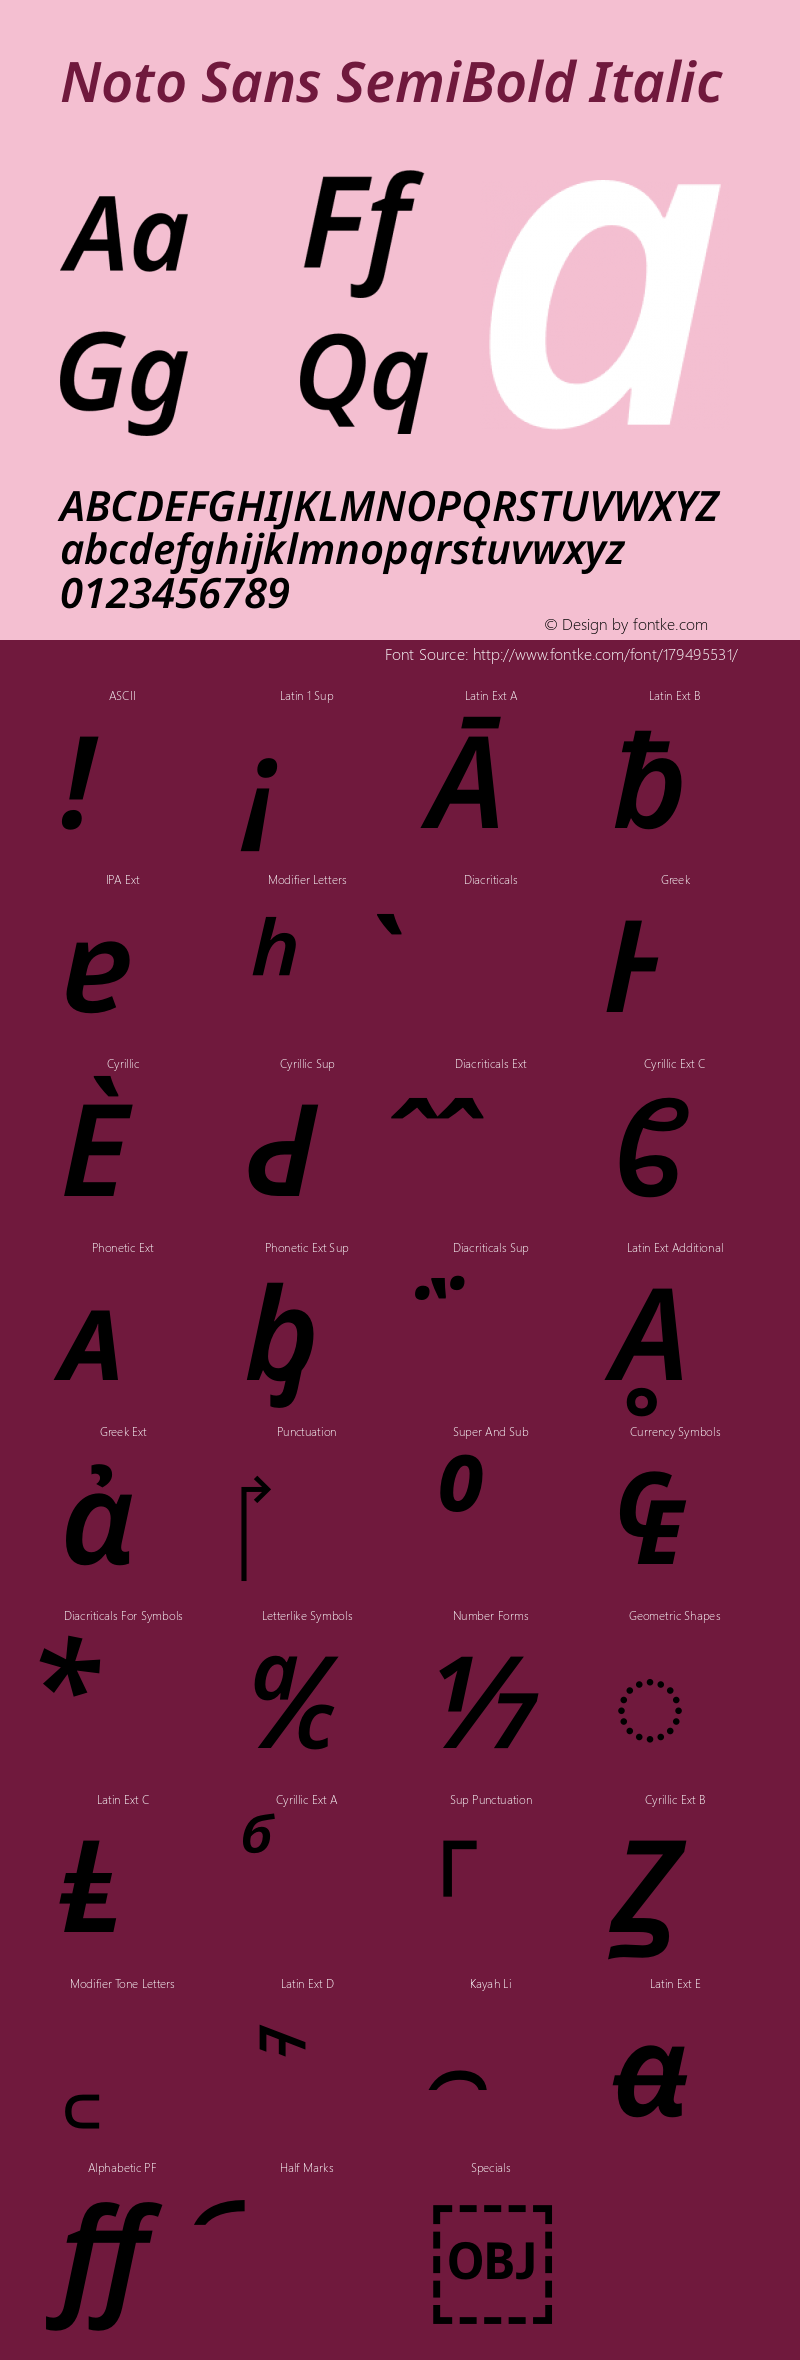 Noto Sans SemiBold Italic Version 2.005图片样张